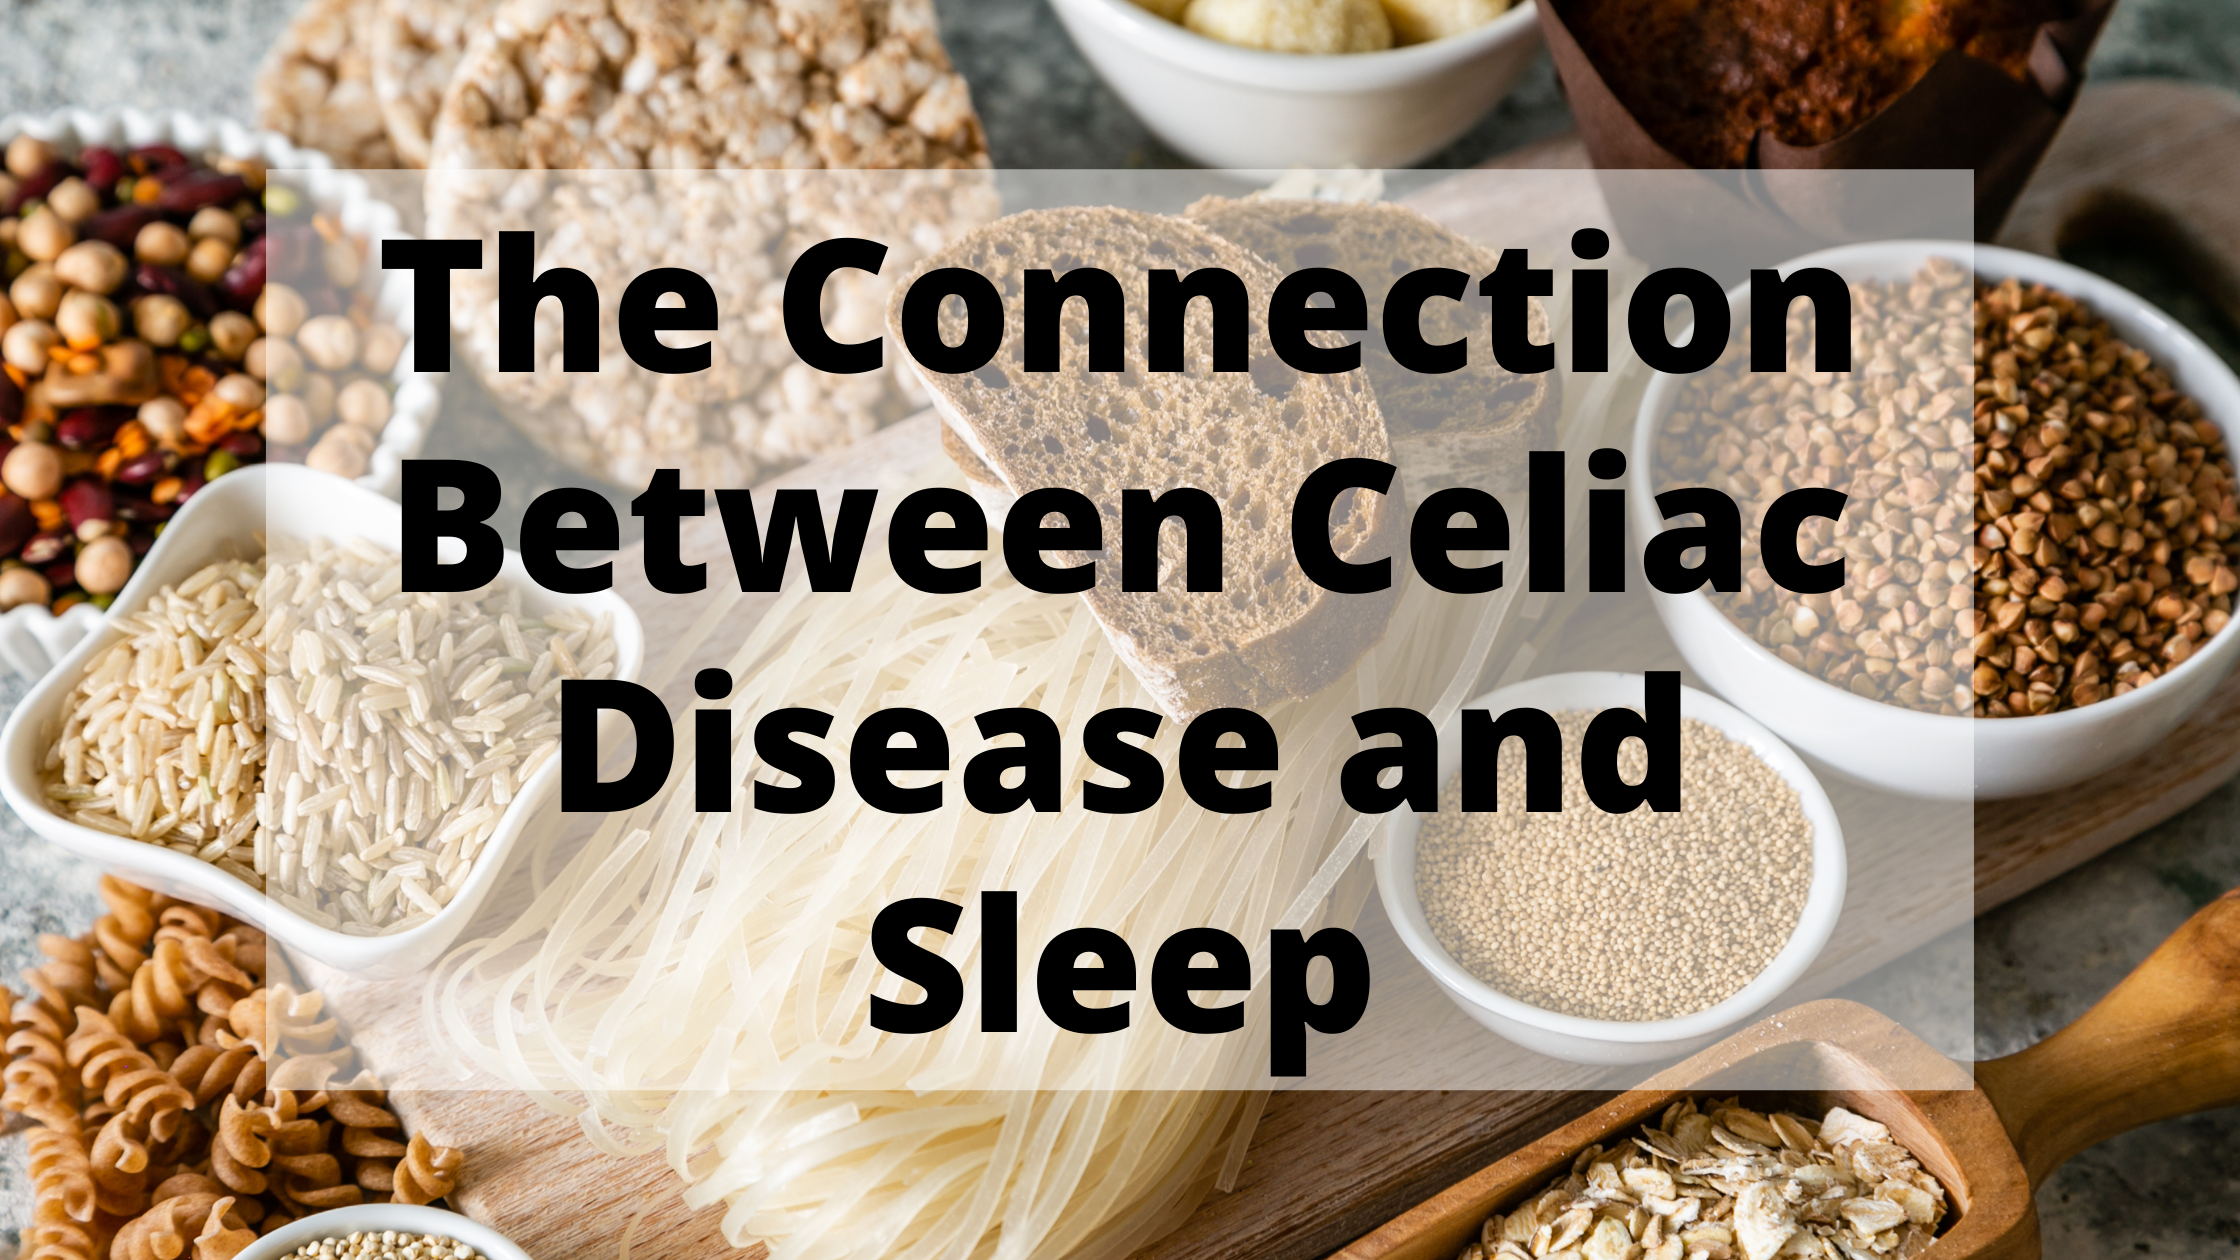 The Connection Between Celiac Disease and Sleep